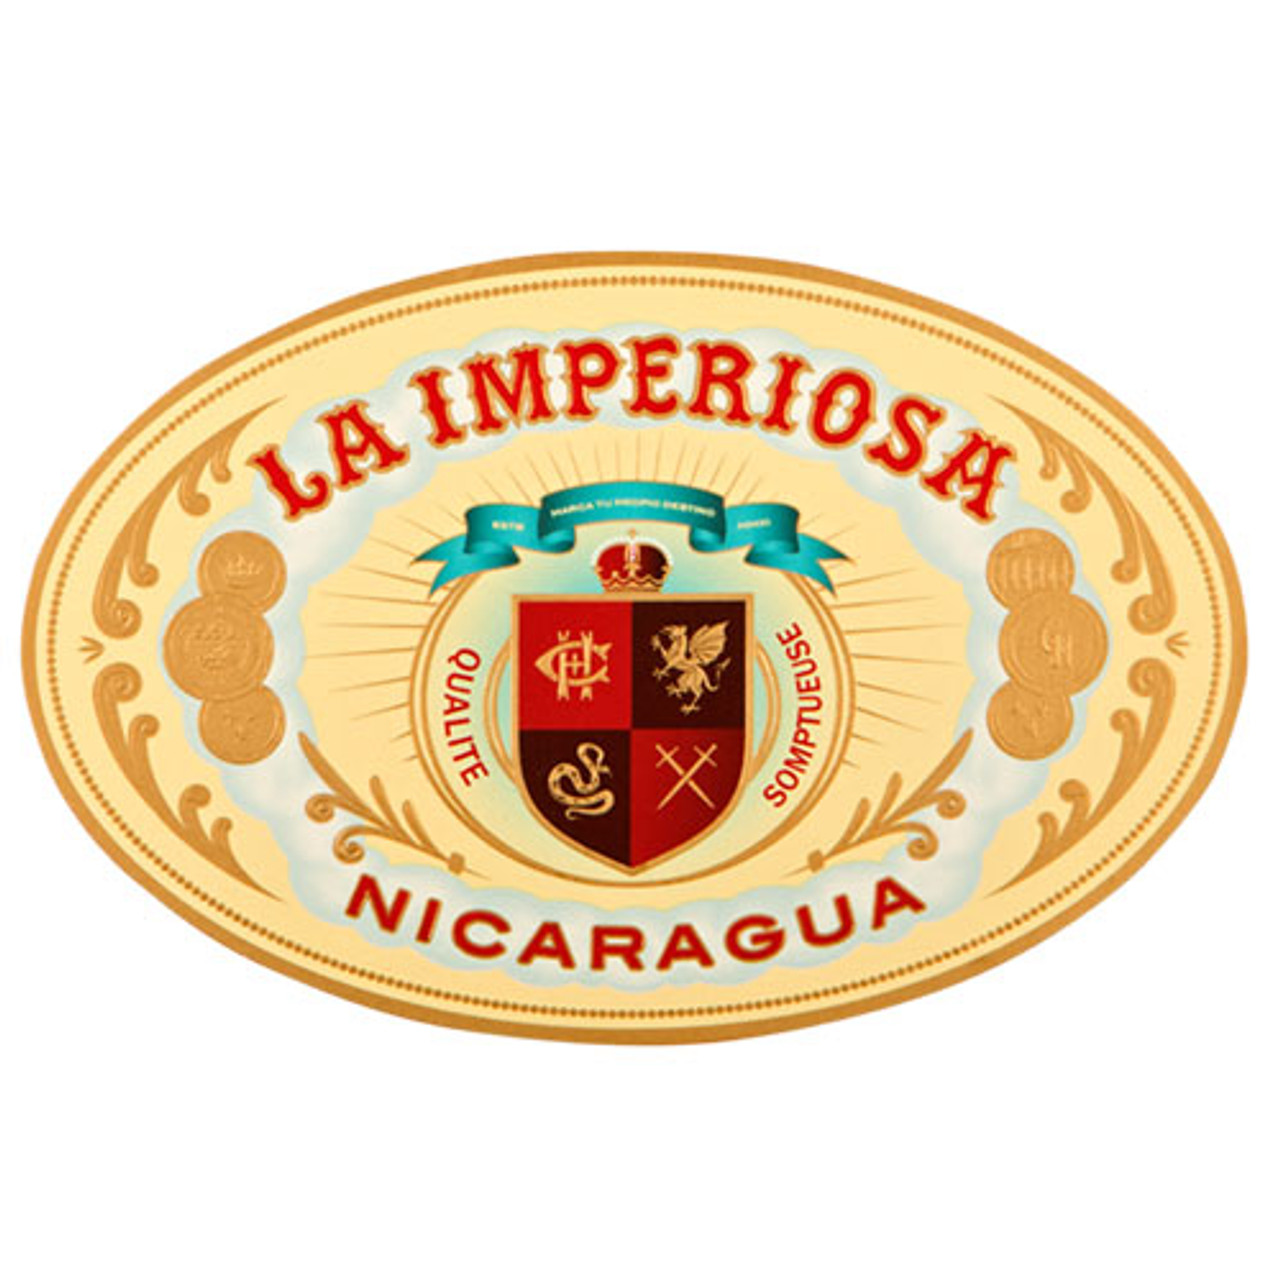 La Imperiosa Logo